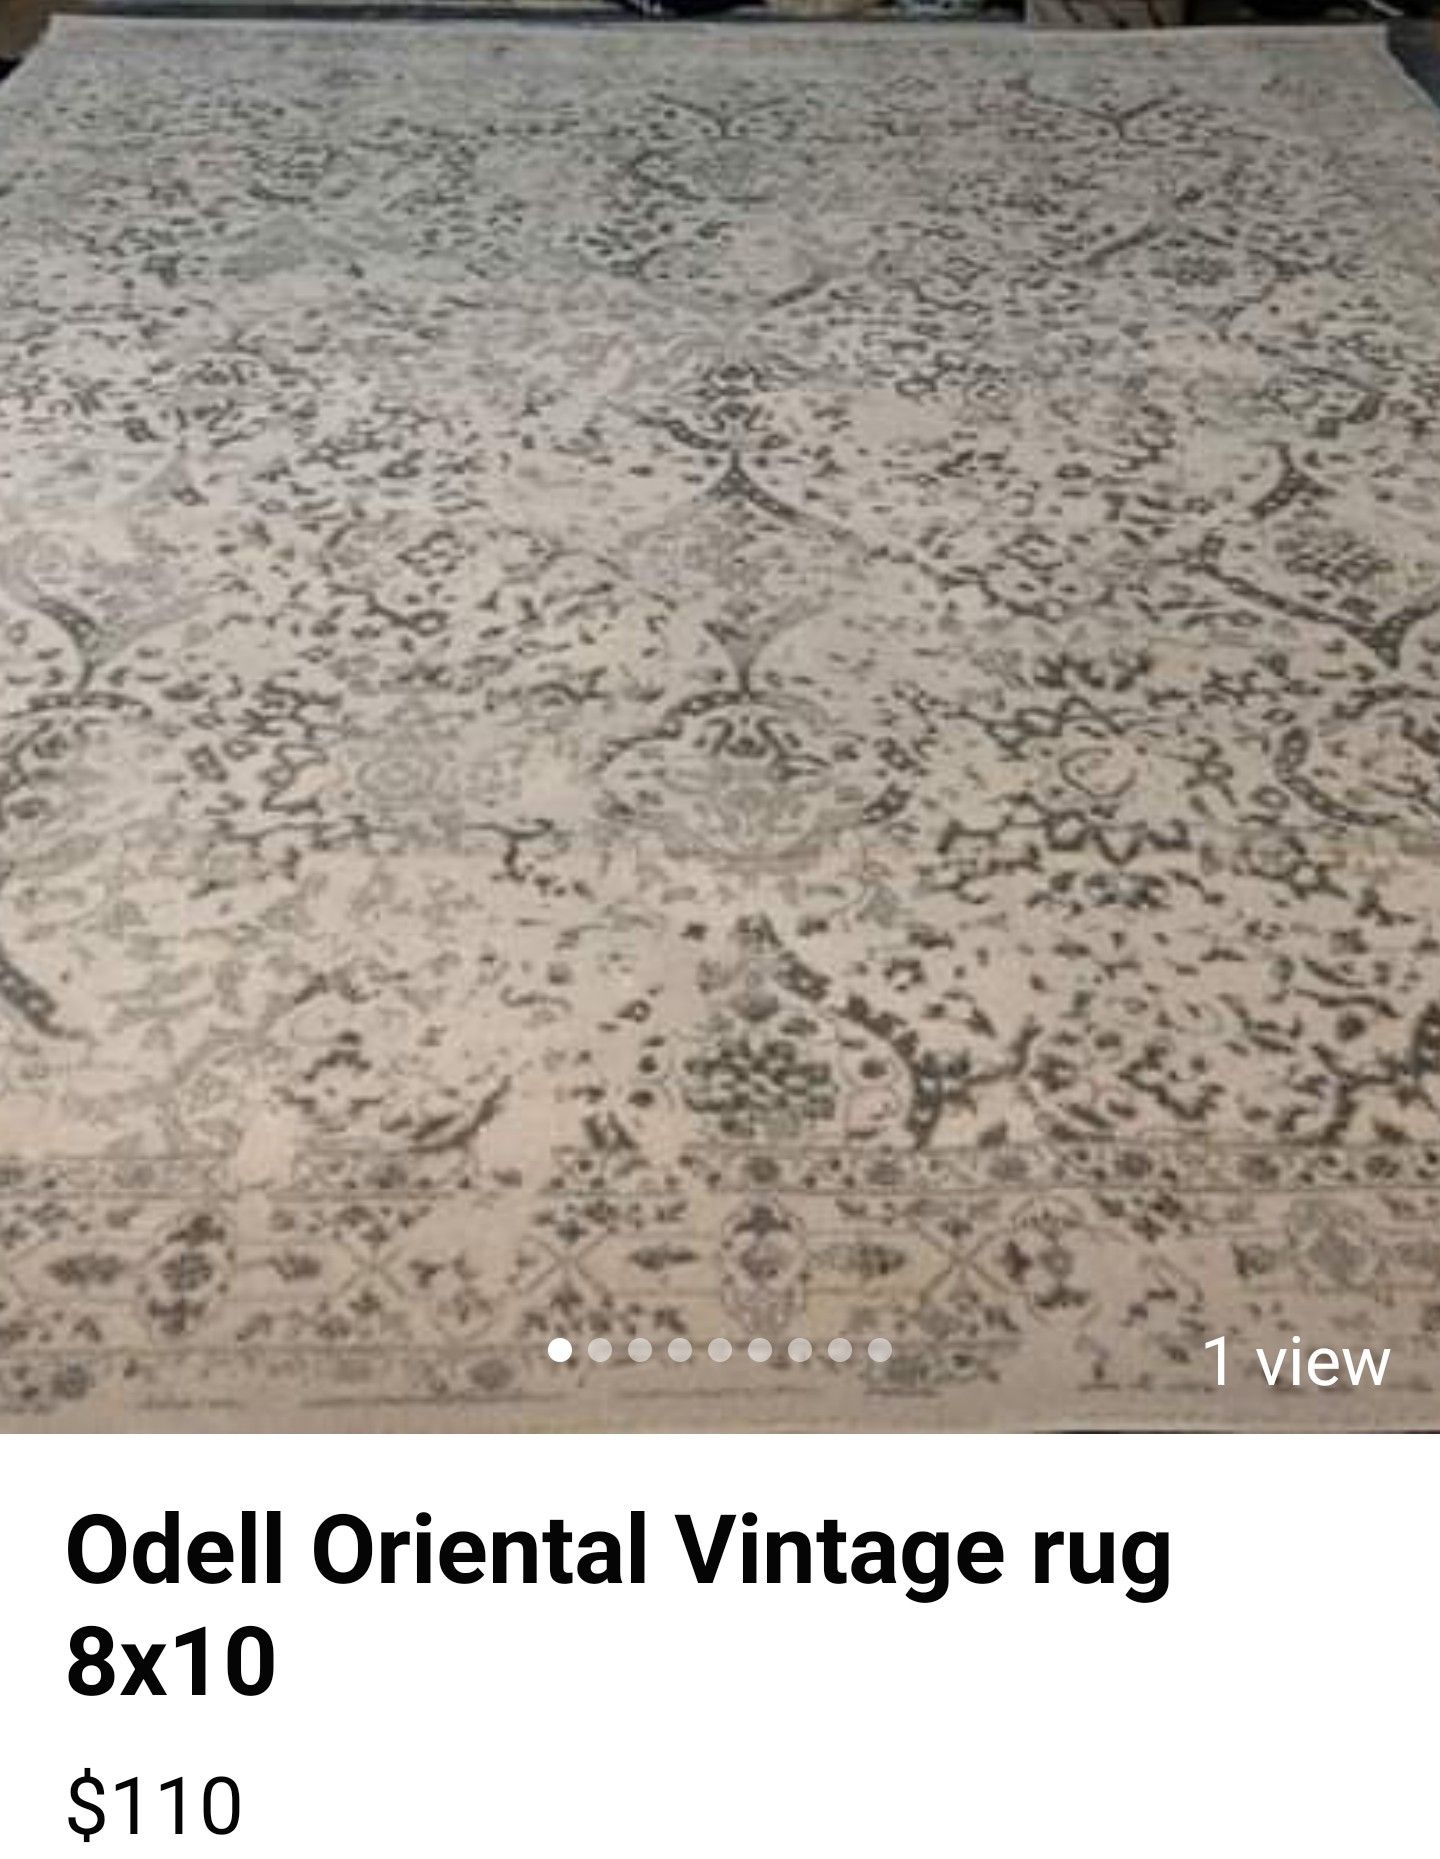 Odell Oriental Vintage rug 8x10